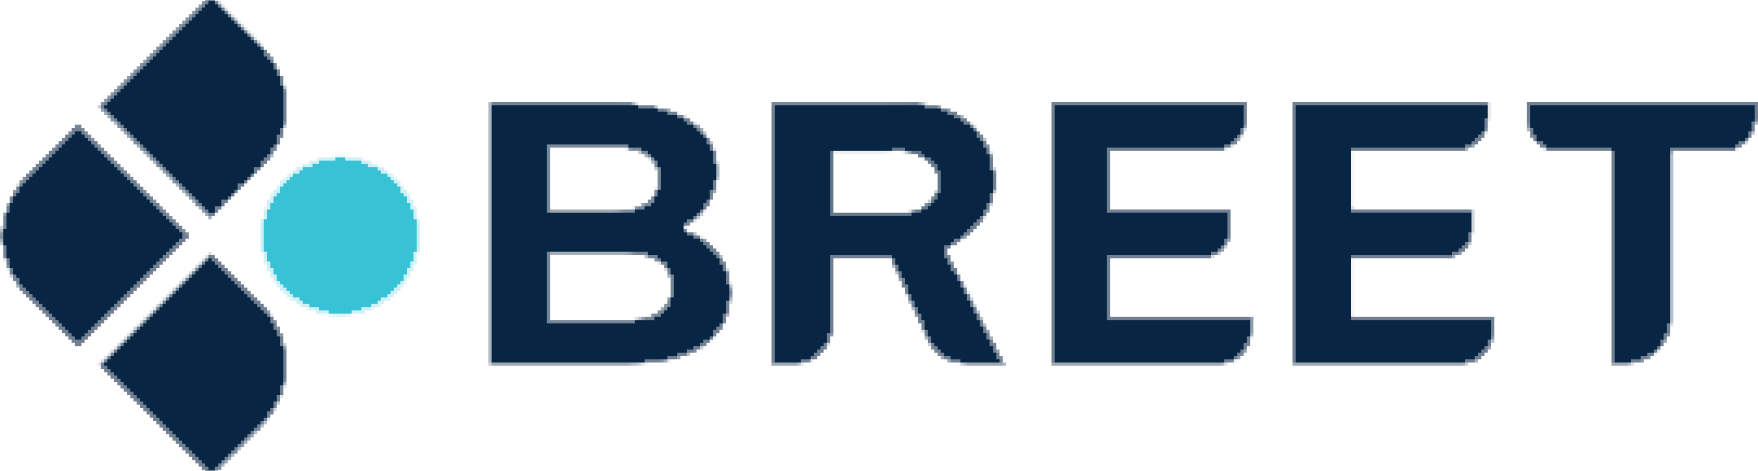 breet logo